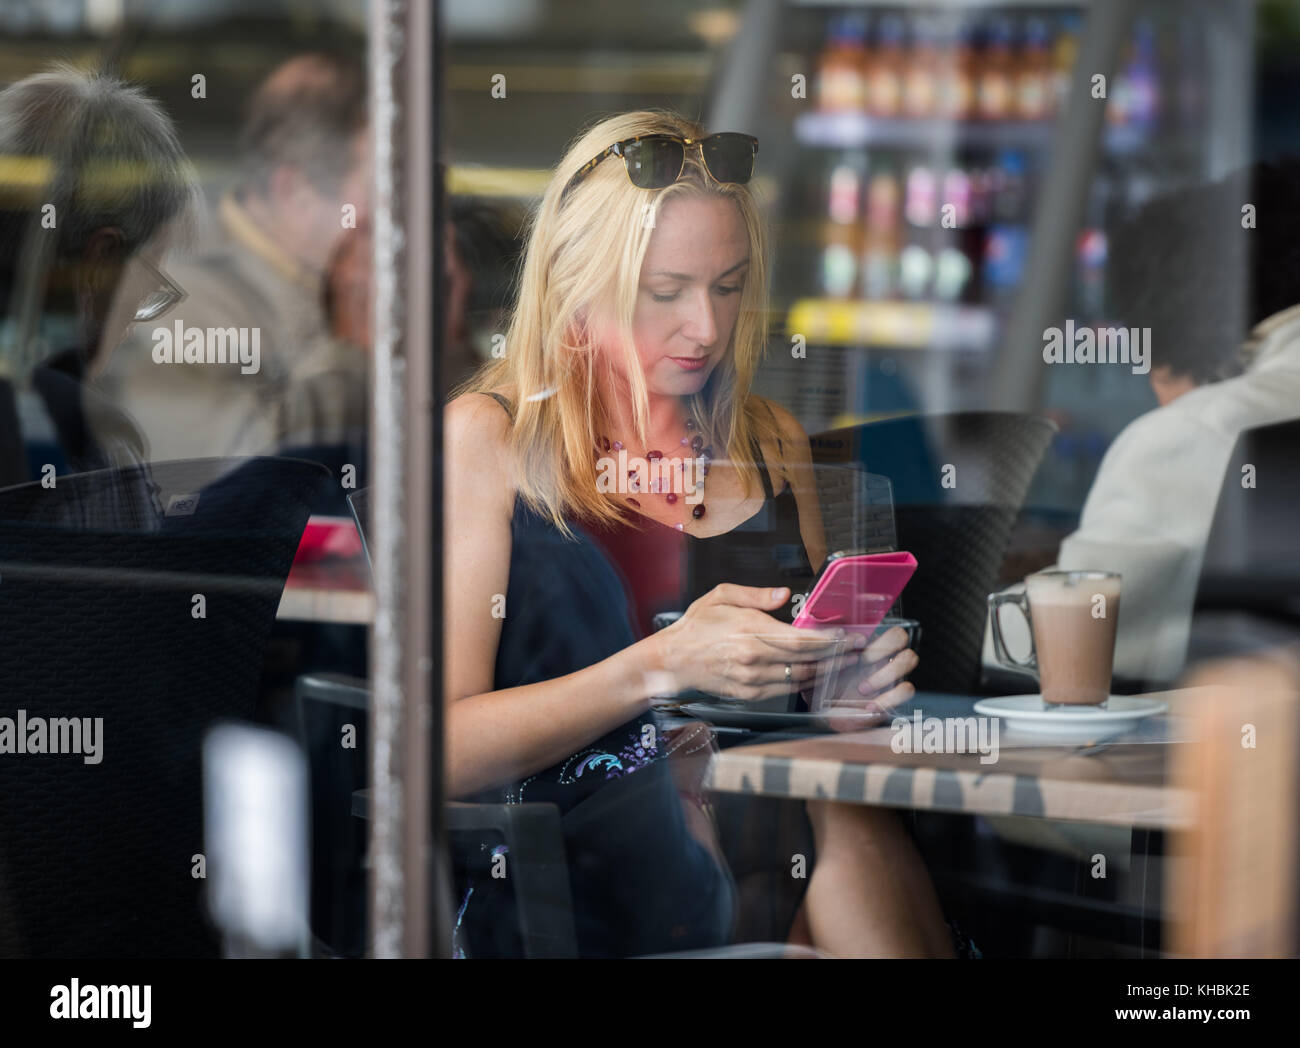 Girl in cafe using smartphone. Stock Photo